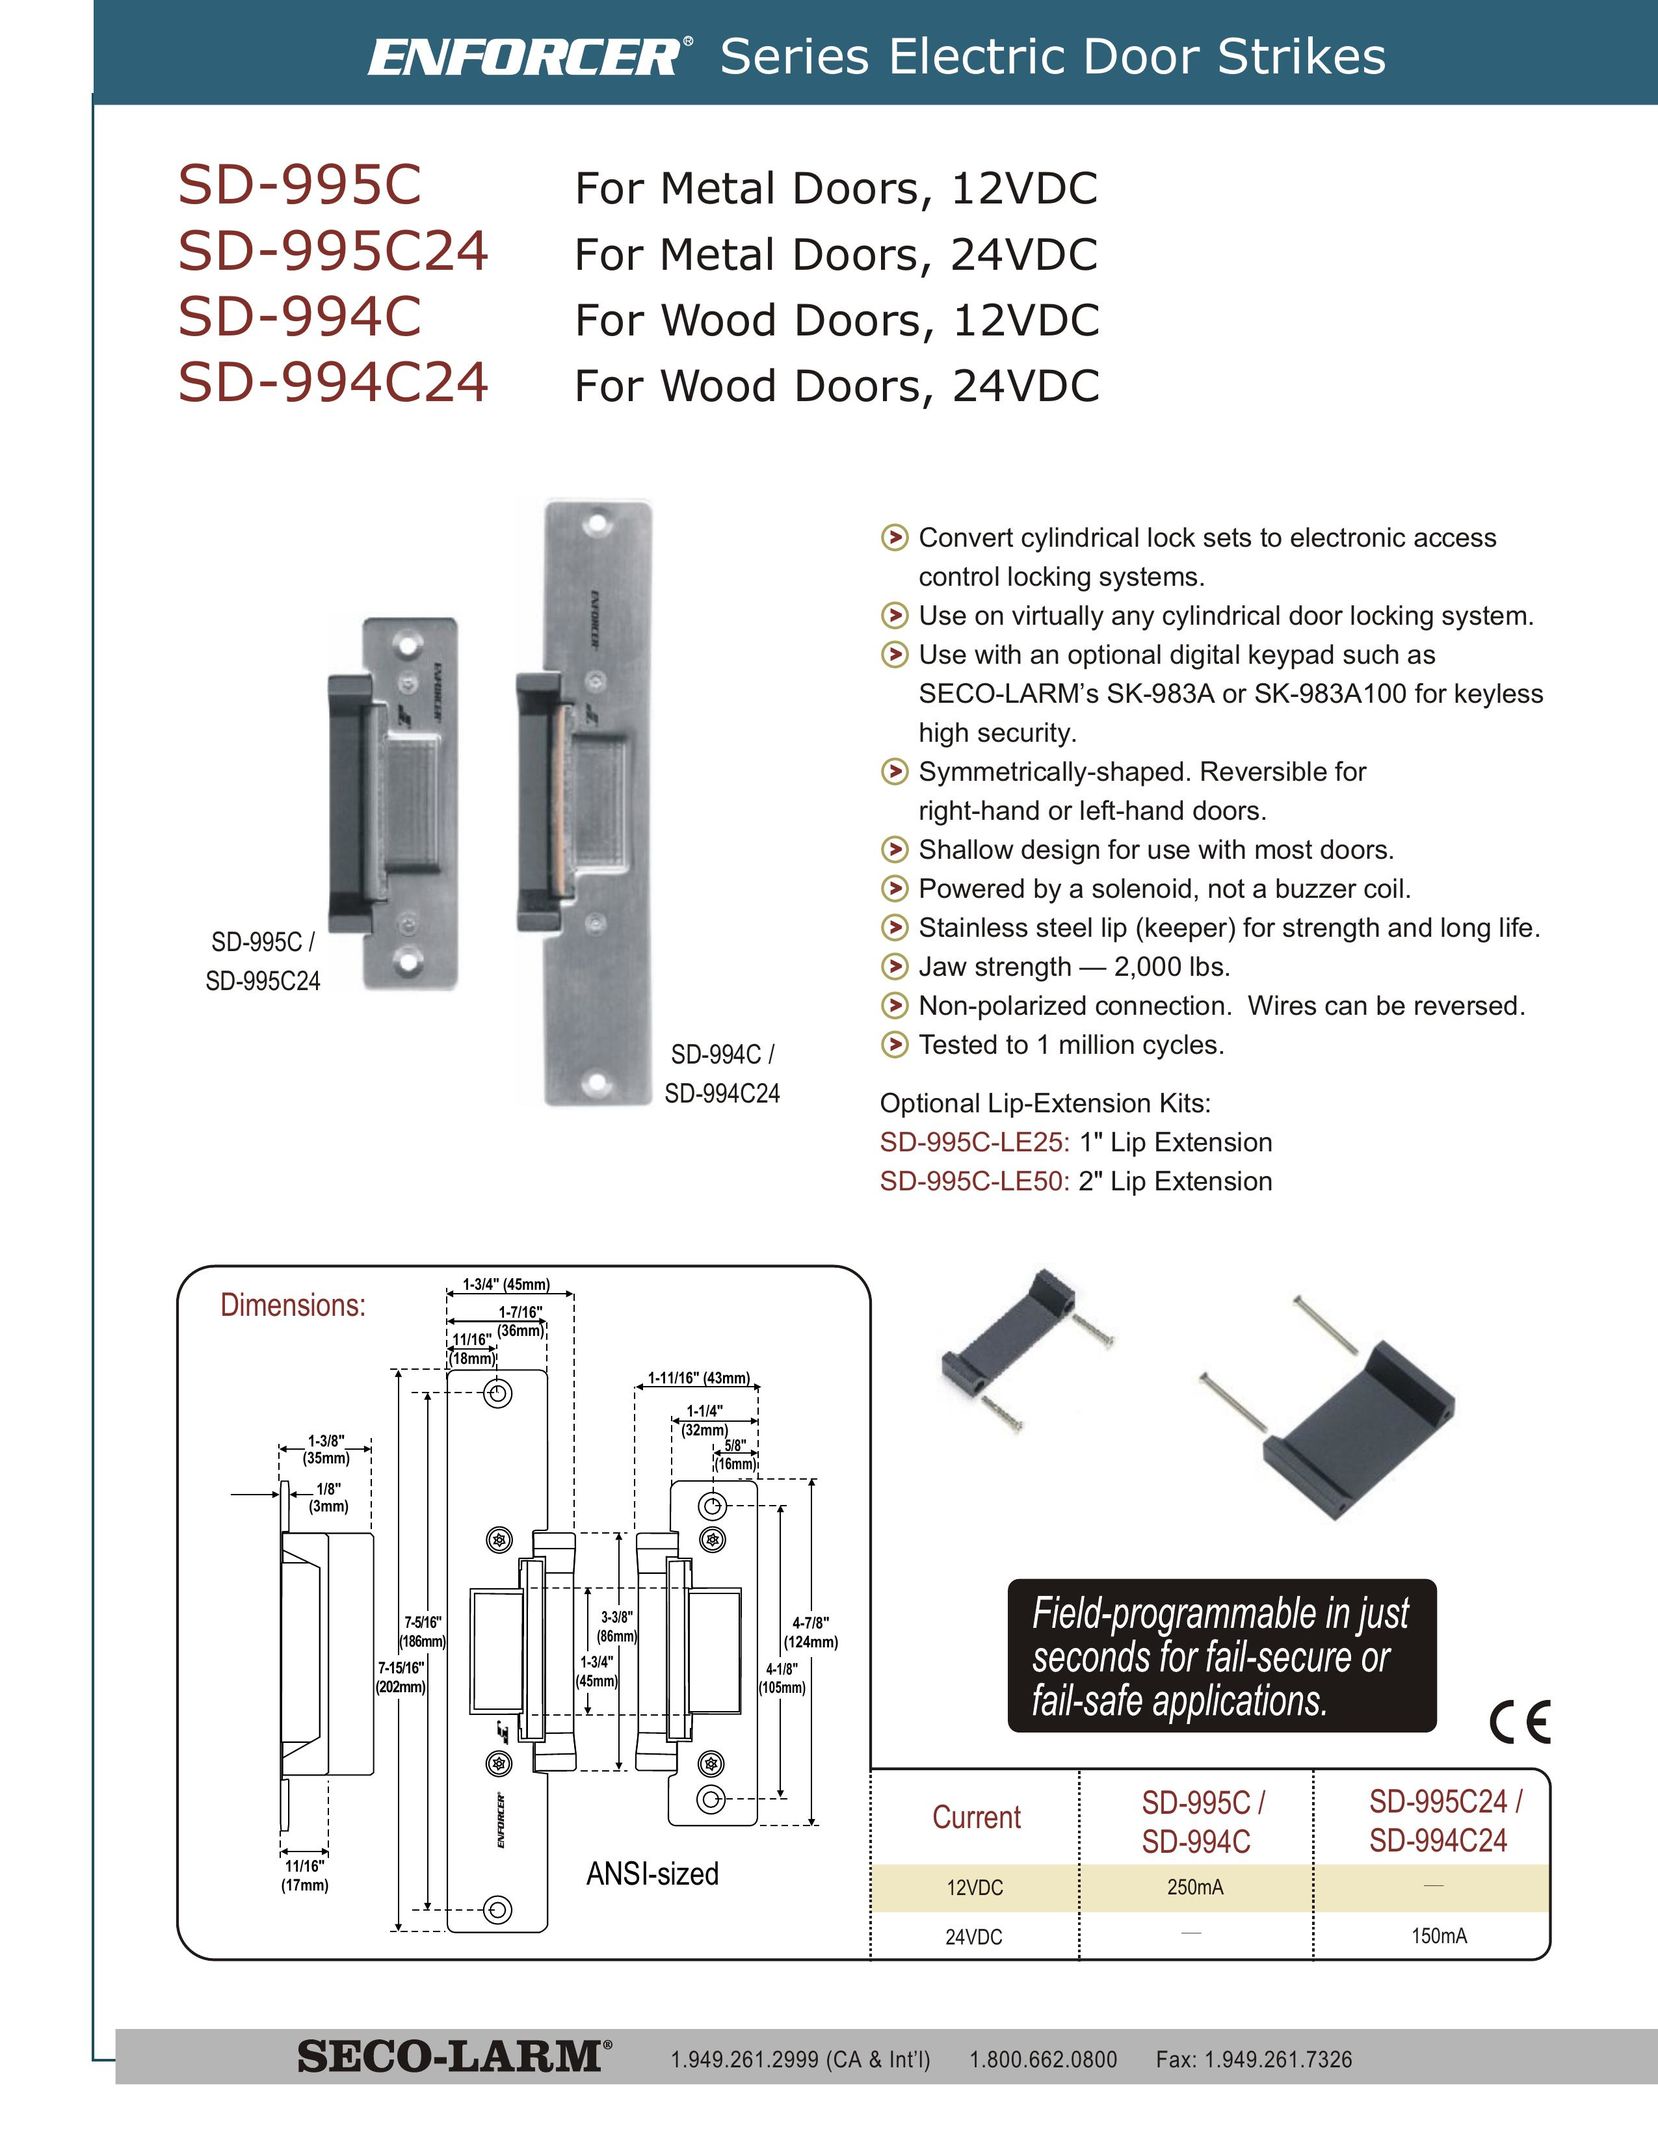 SECO-LARM USA SD-995C Door User Manual